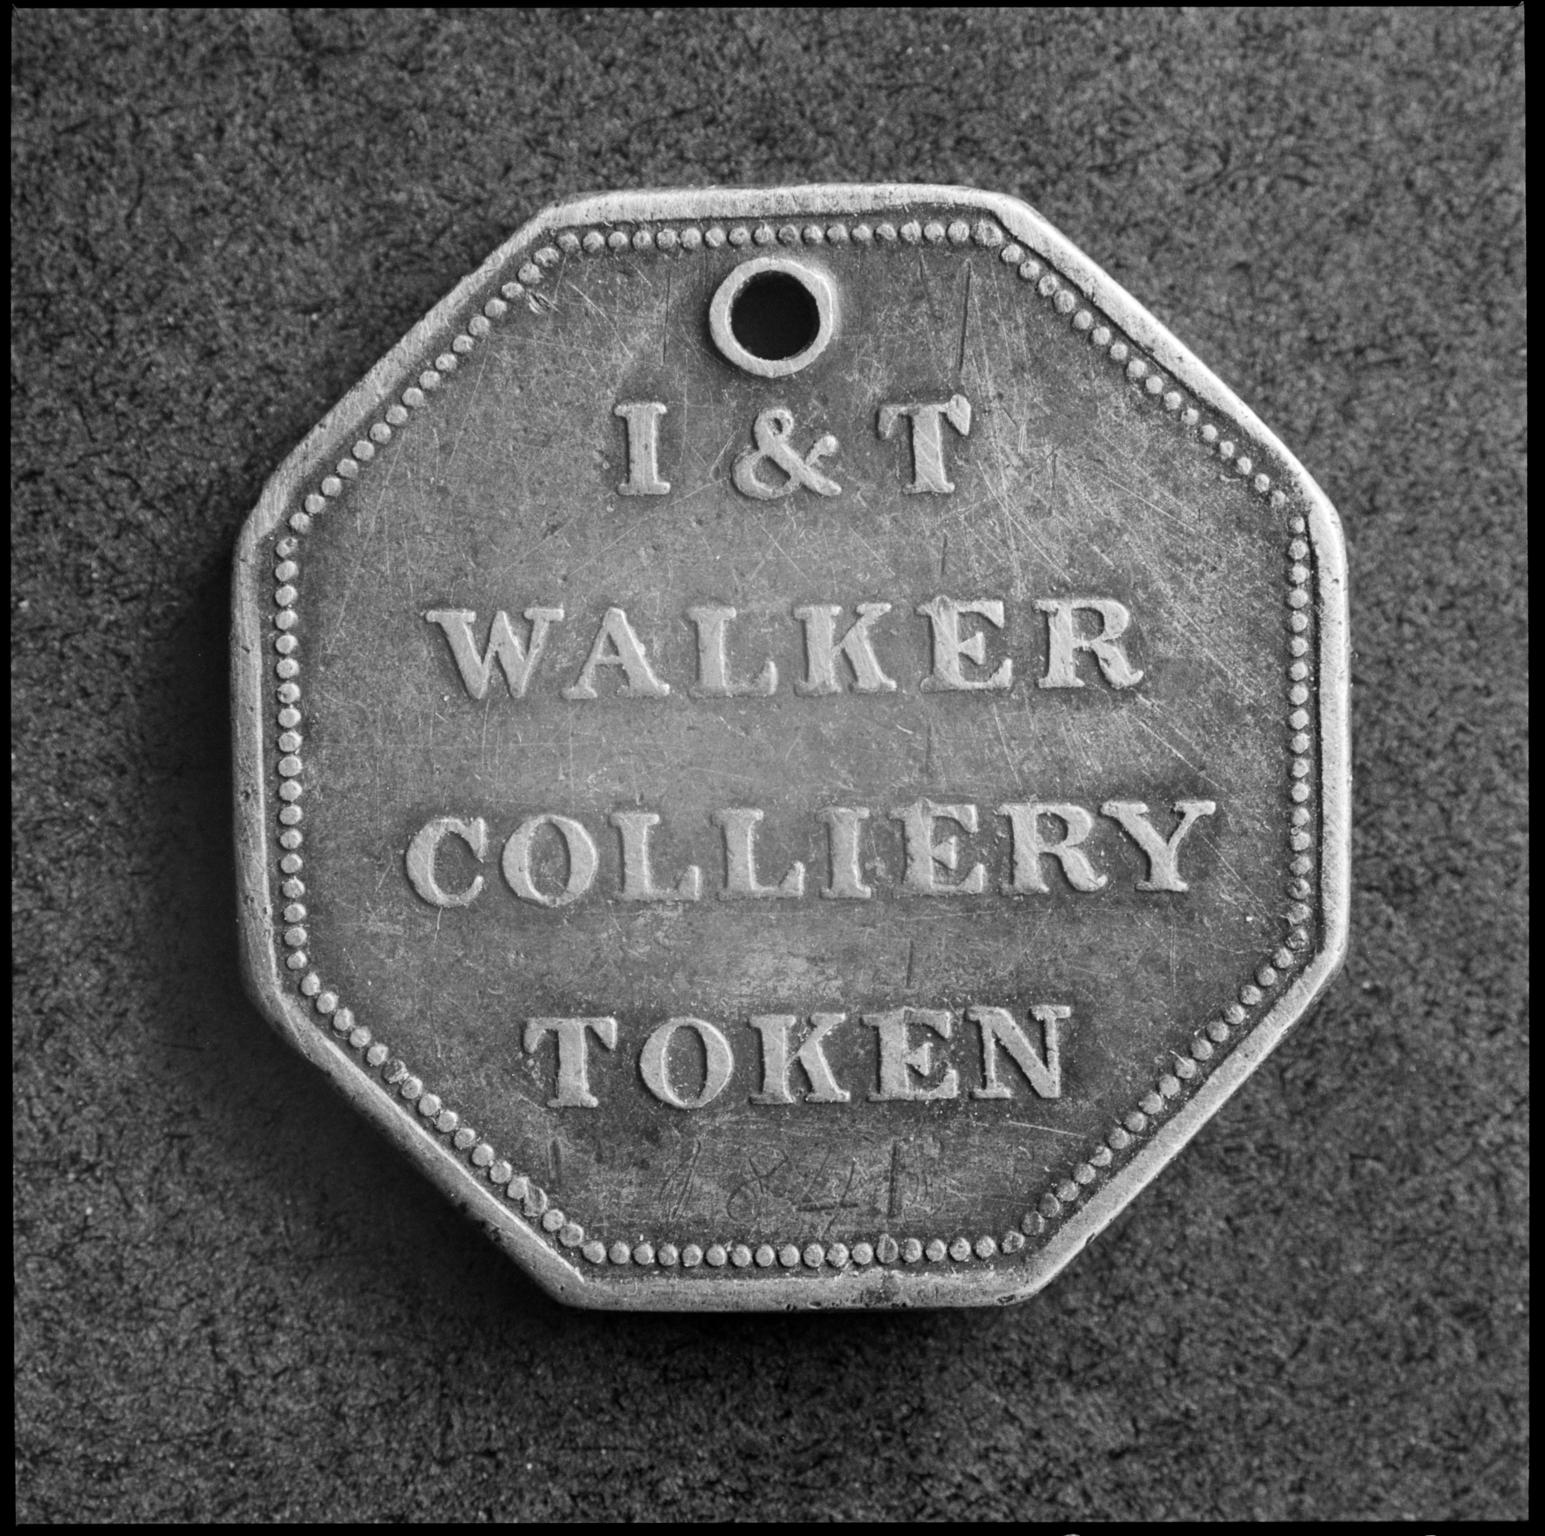 Colliery token, film negative